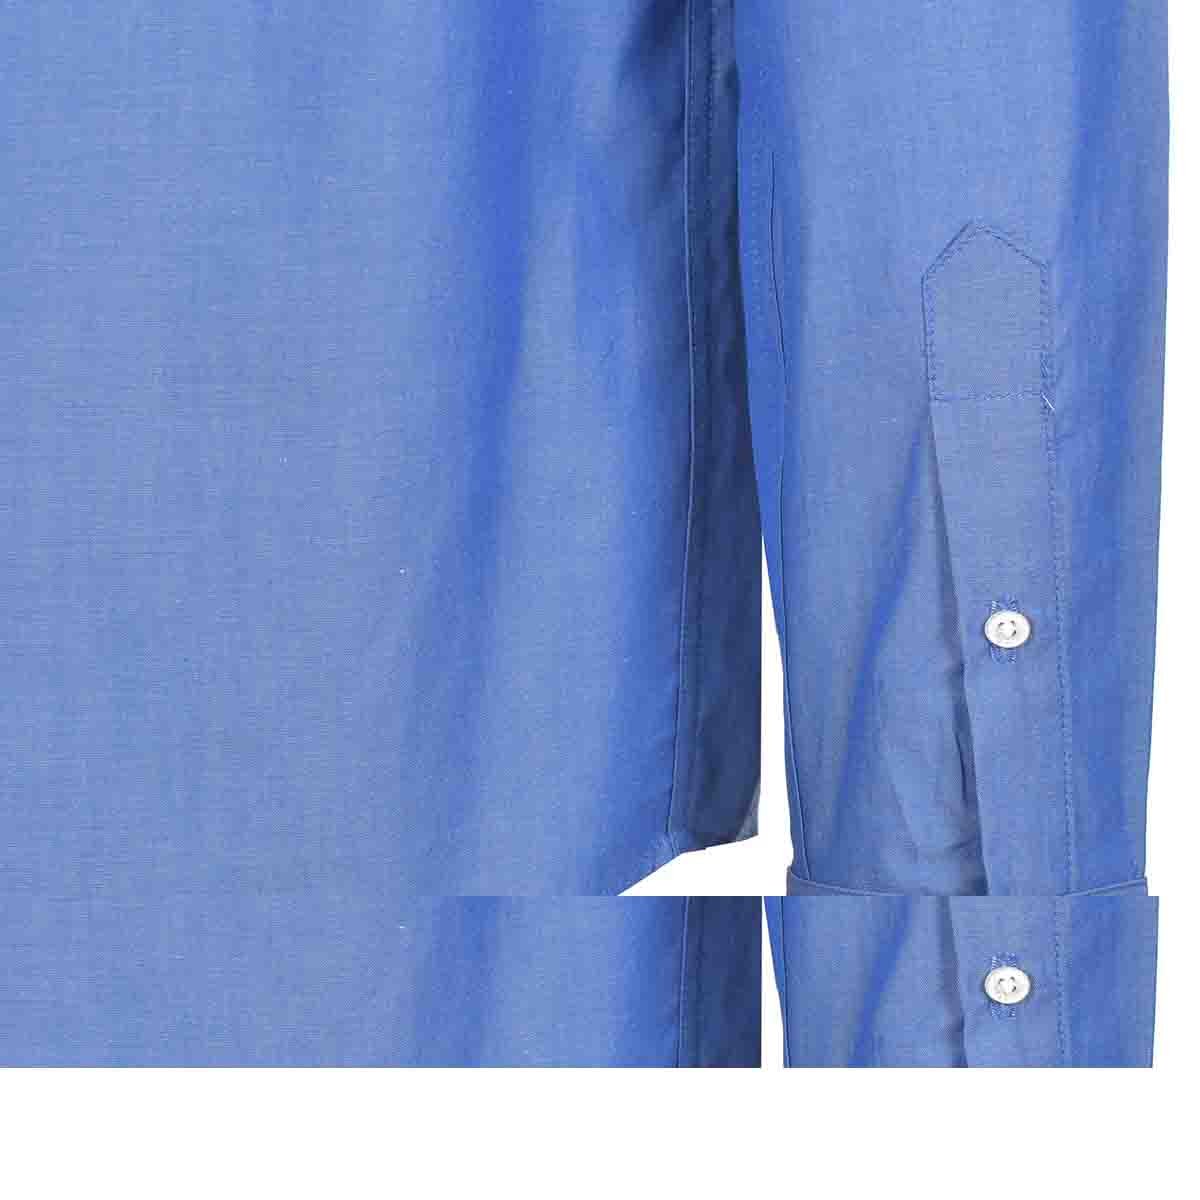 Camisa Lisa Azul Polo Club